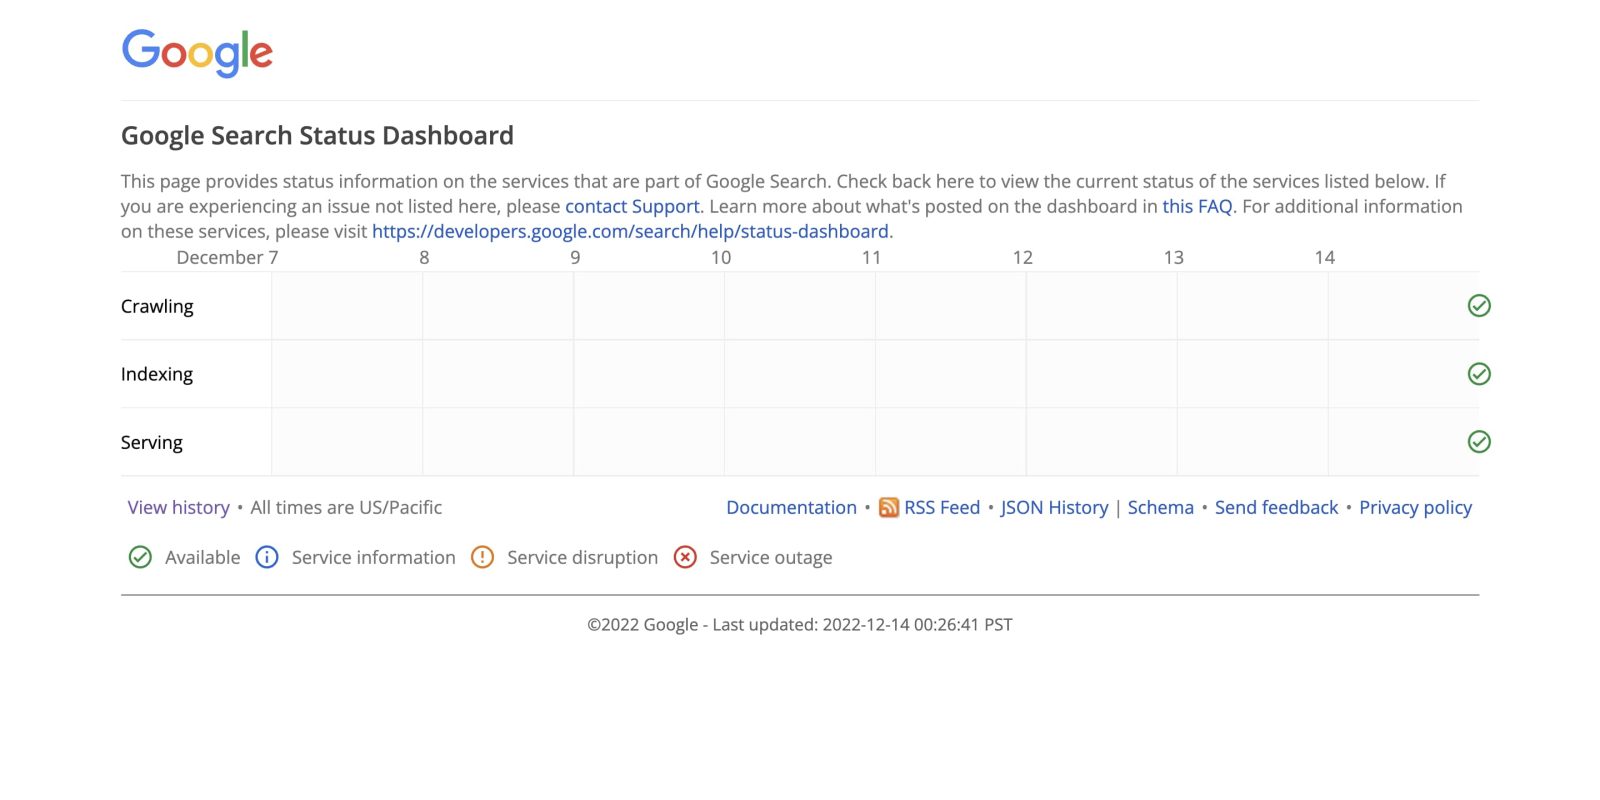 Google Search Status Dashboard